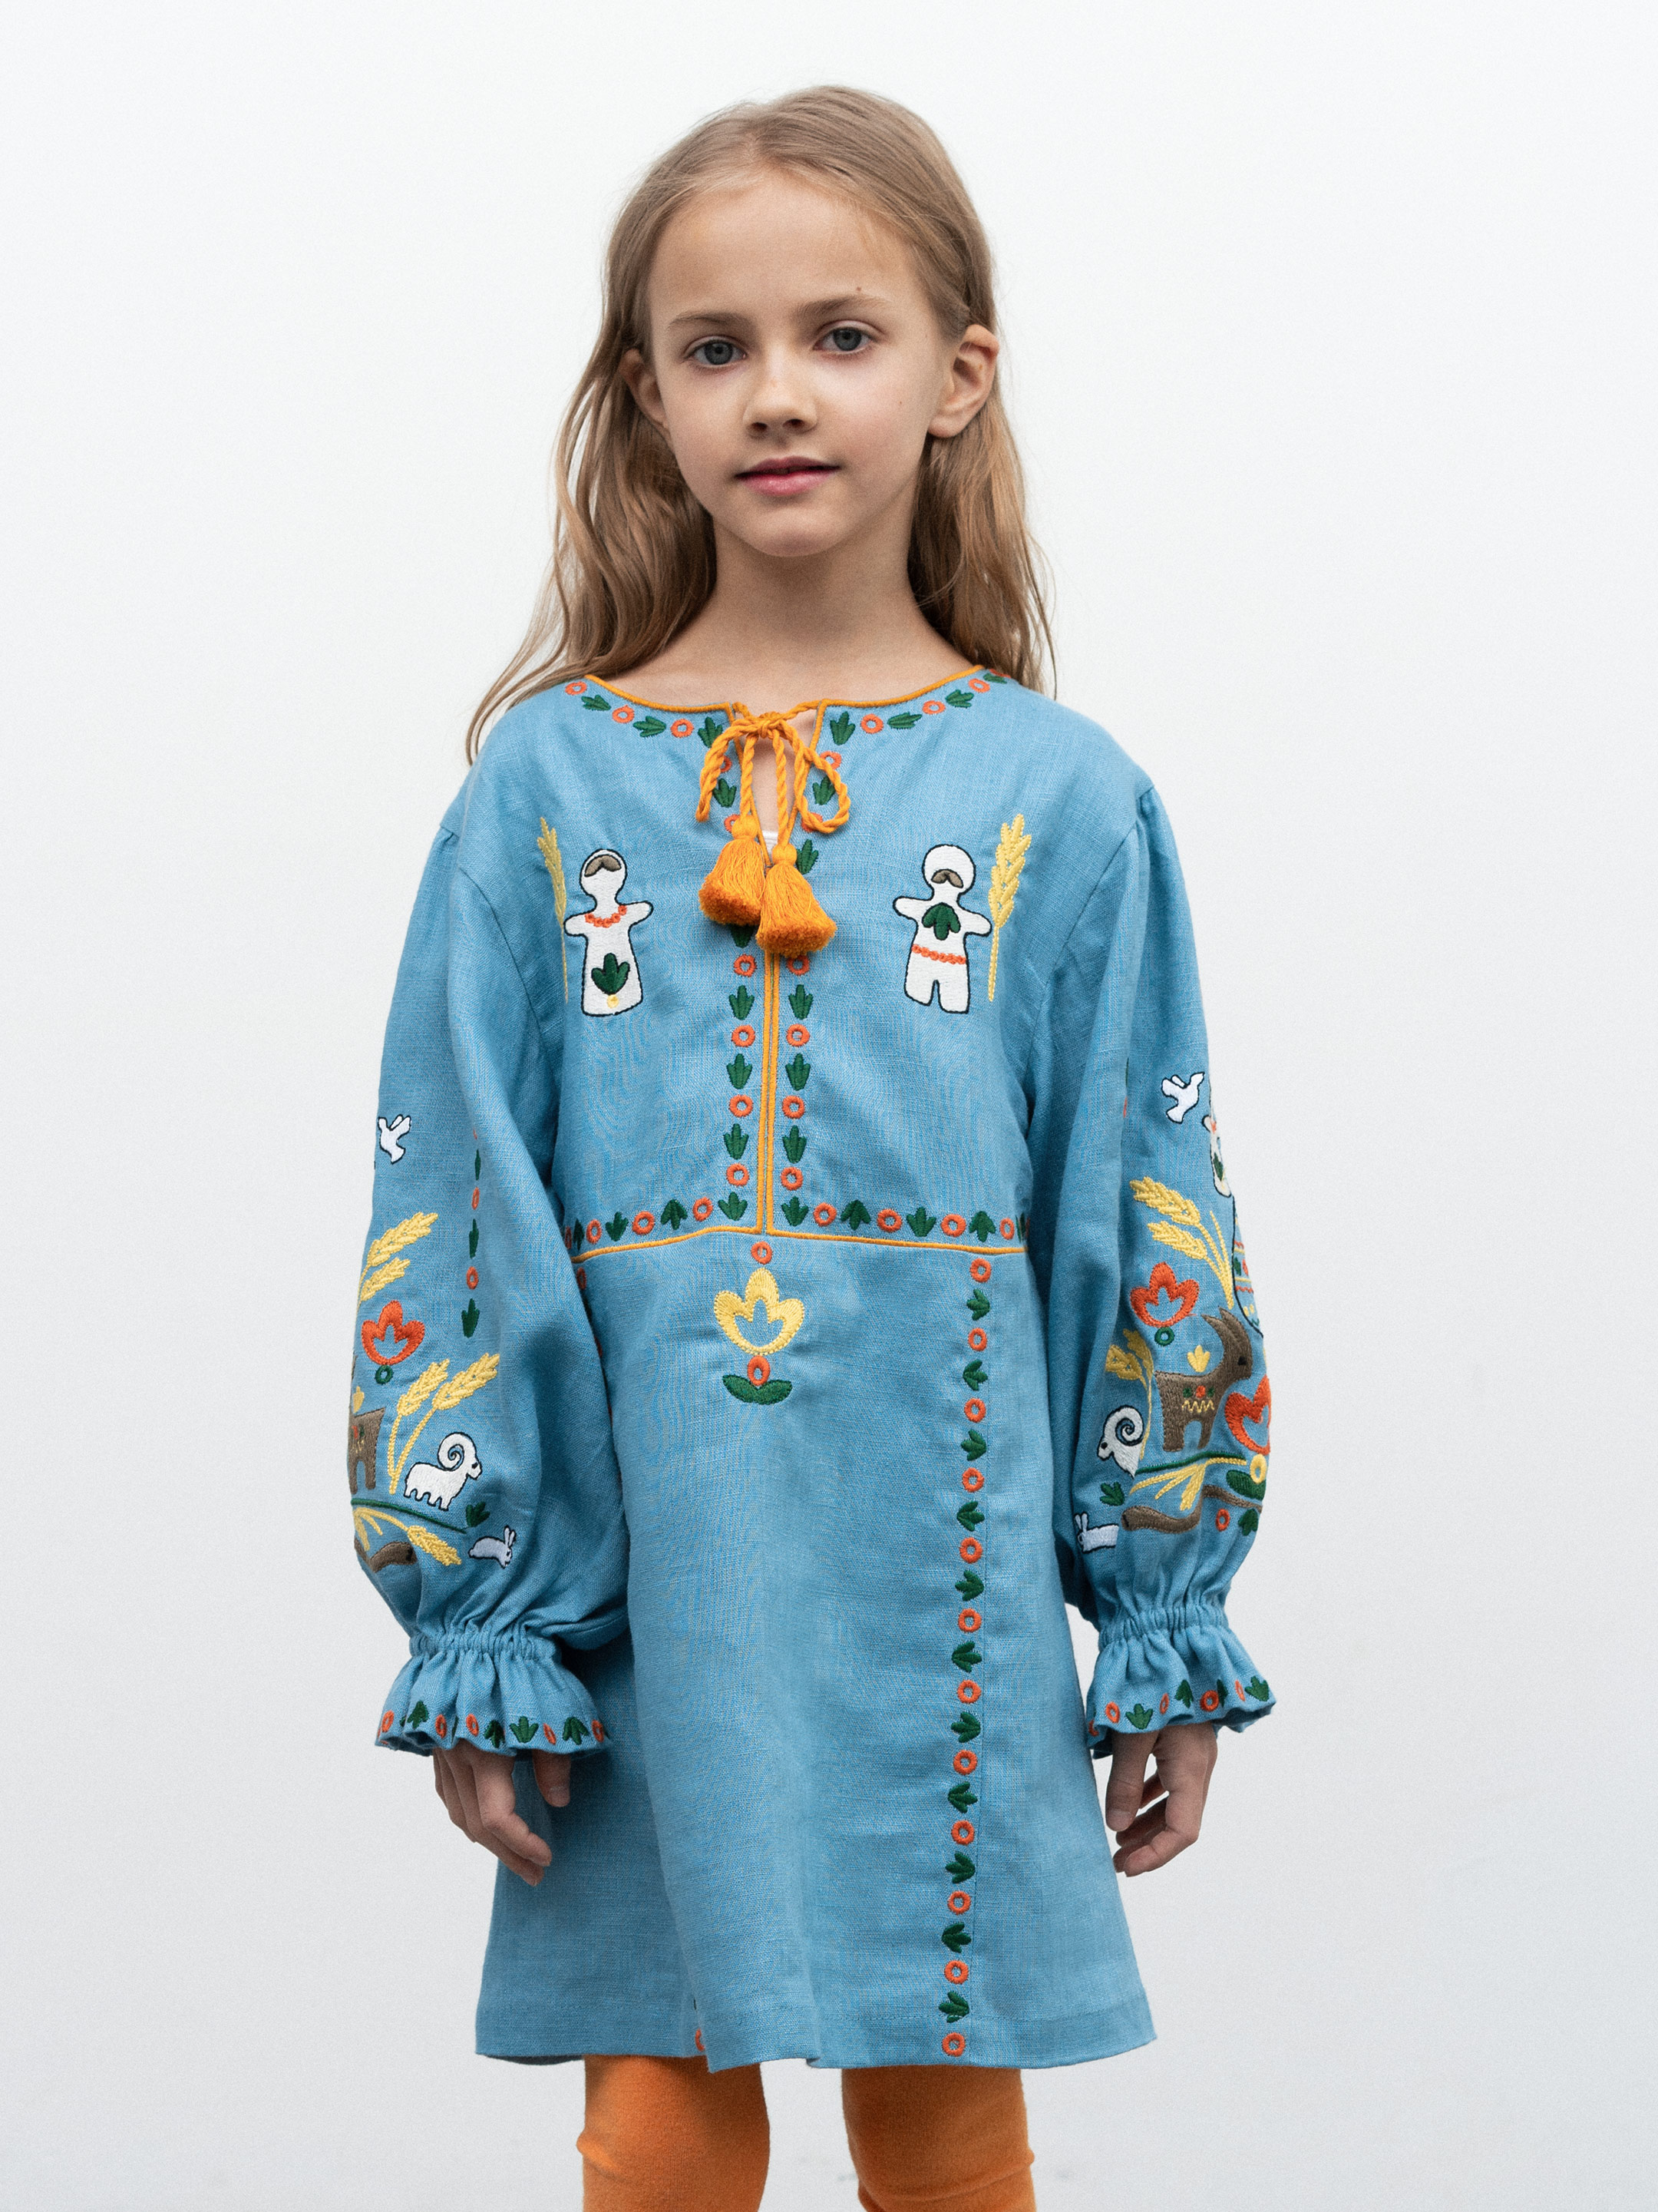 Children's dress with embroidery Yajce Raitse - photo 2